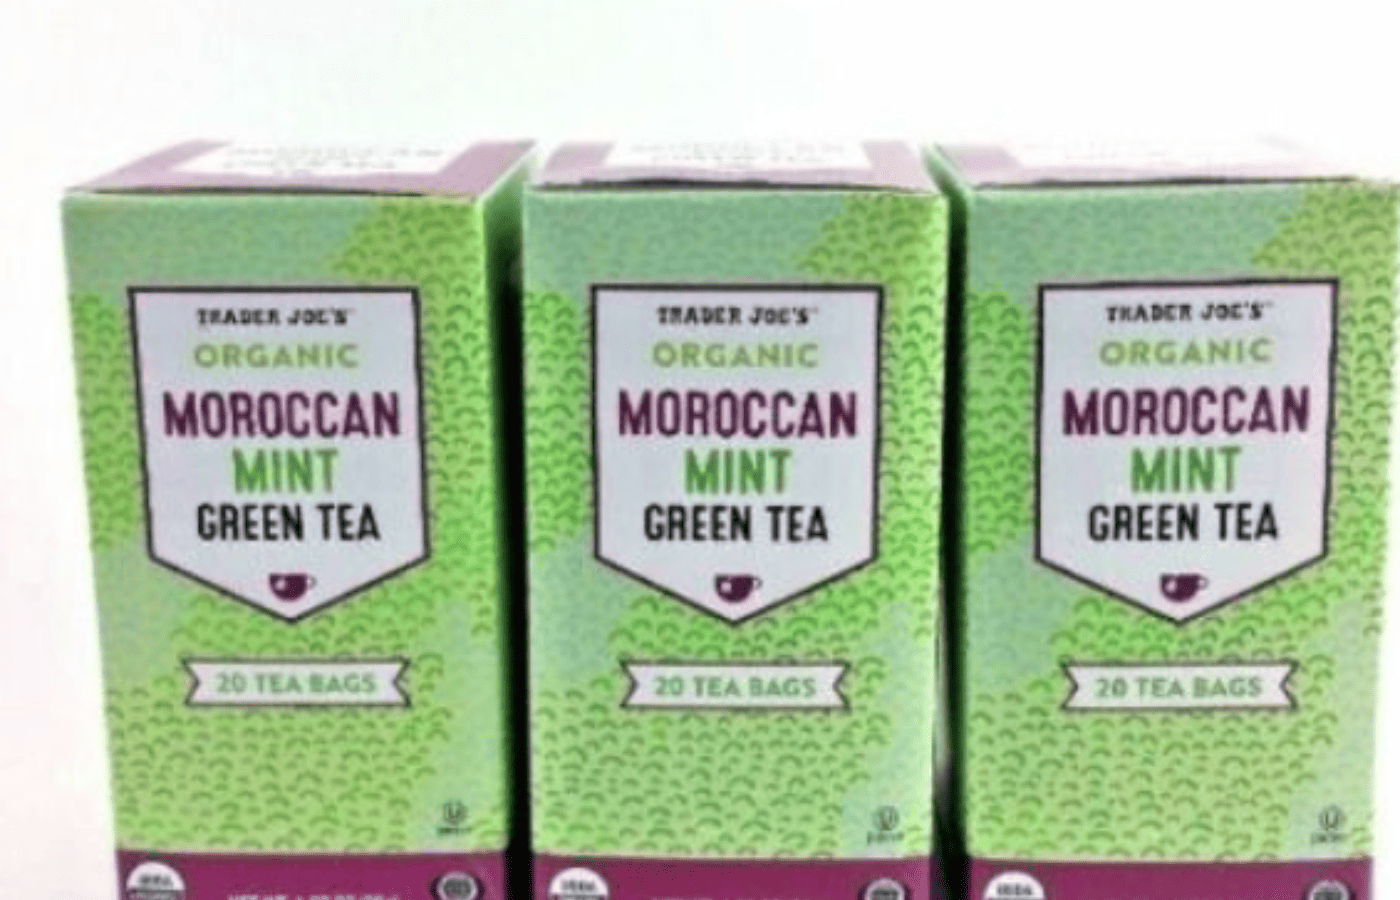 Does Trader Joe's Moroccan Mint Tea Have Caffeine